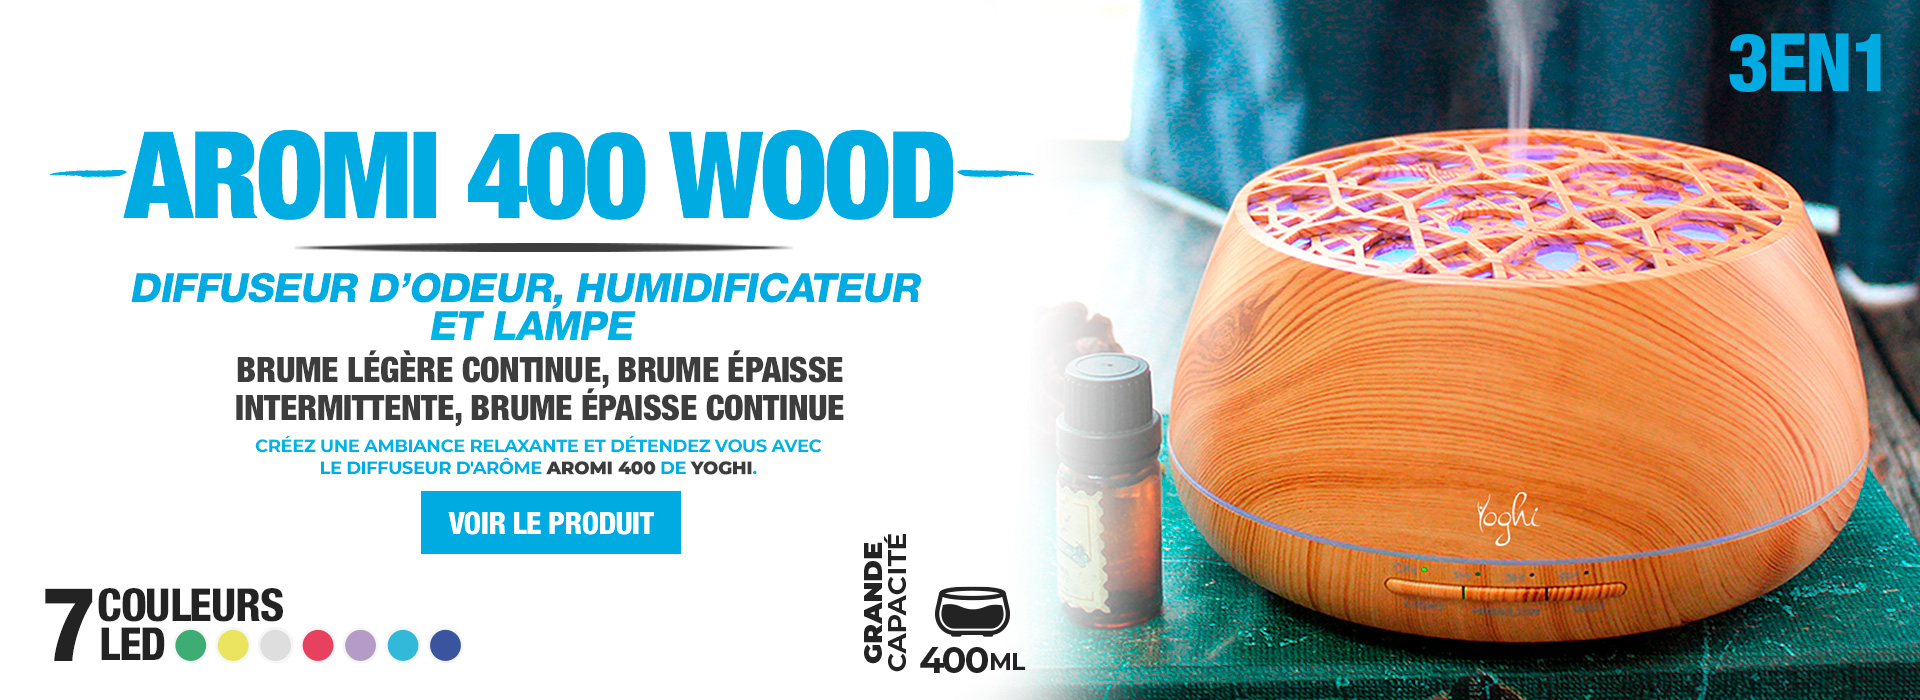 Aromi 400 Wood